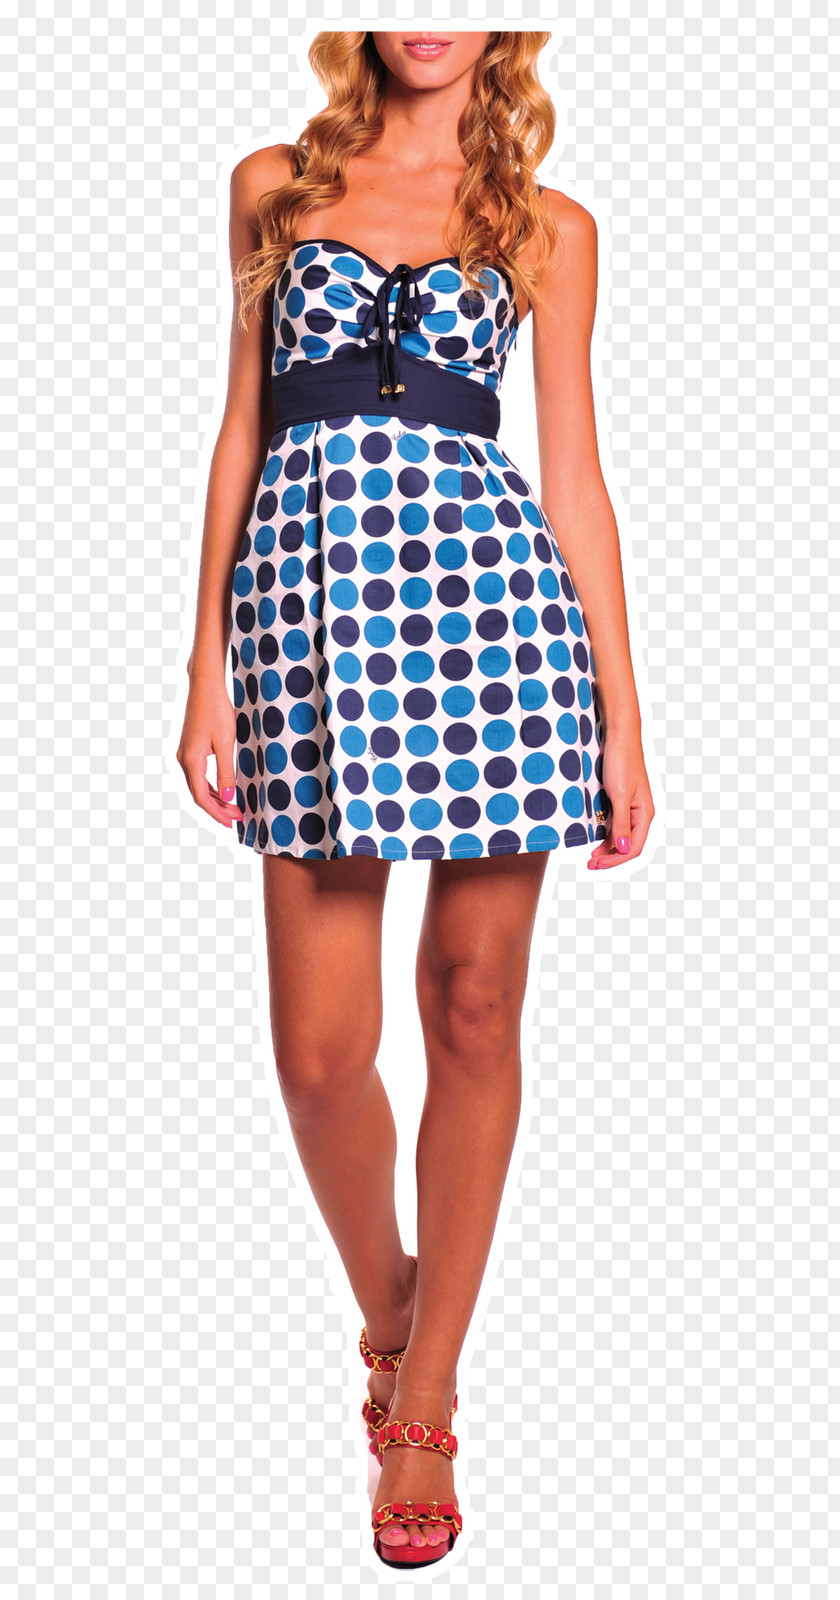 Poa Polka Dot Fashion Clothing Model Dress PNG